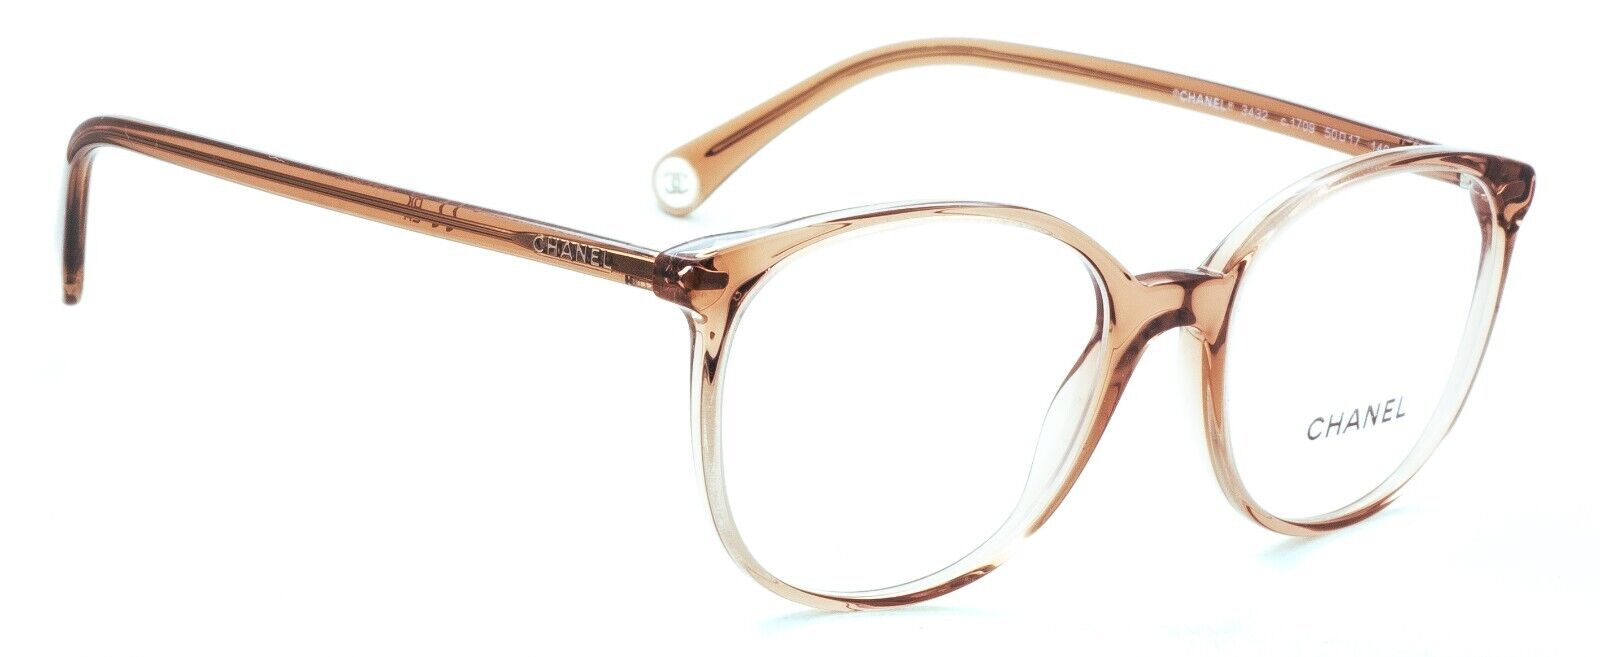 Chanel 3442 1656 Glasses - US